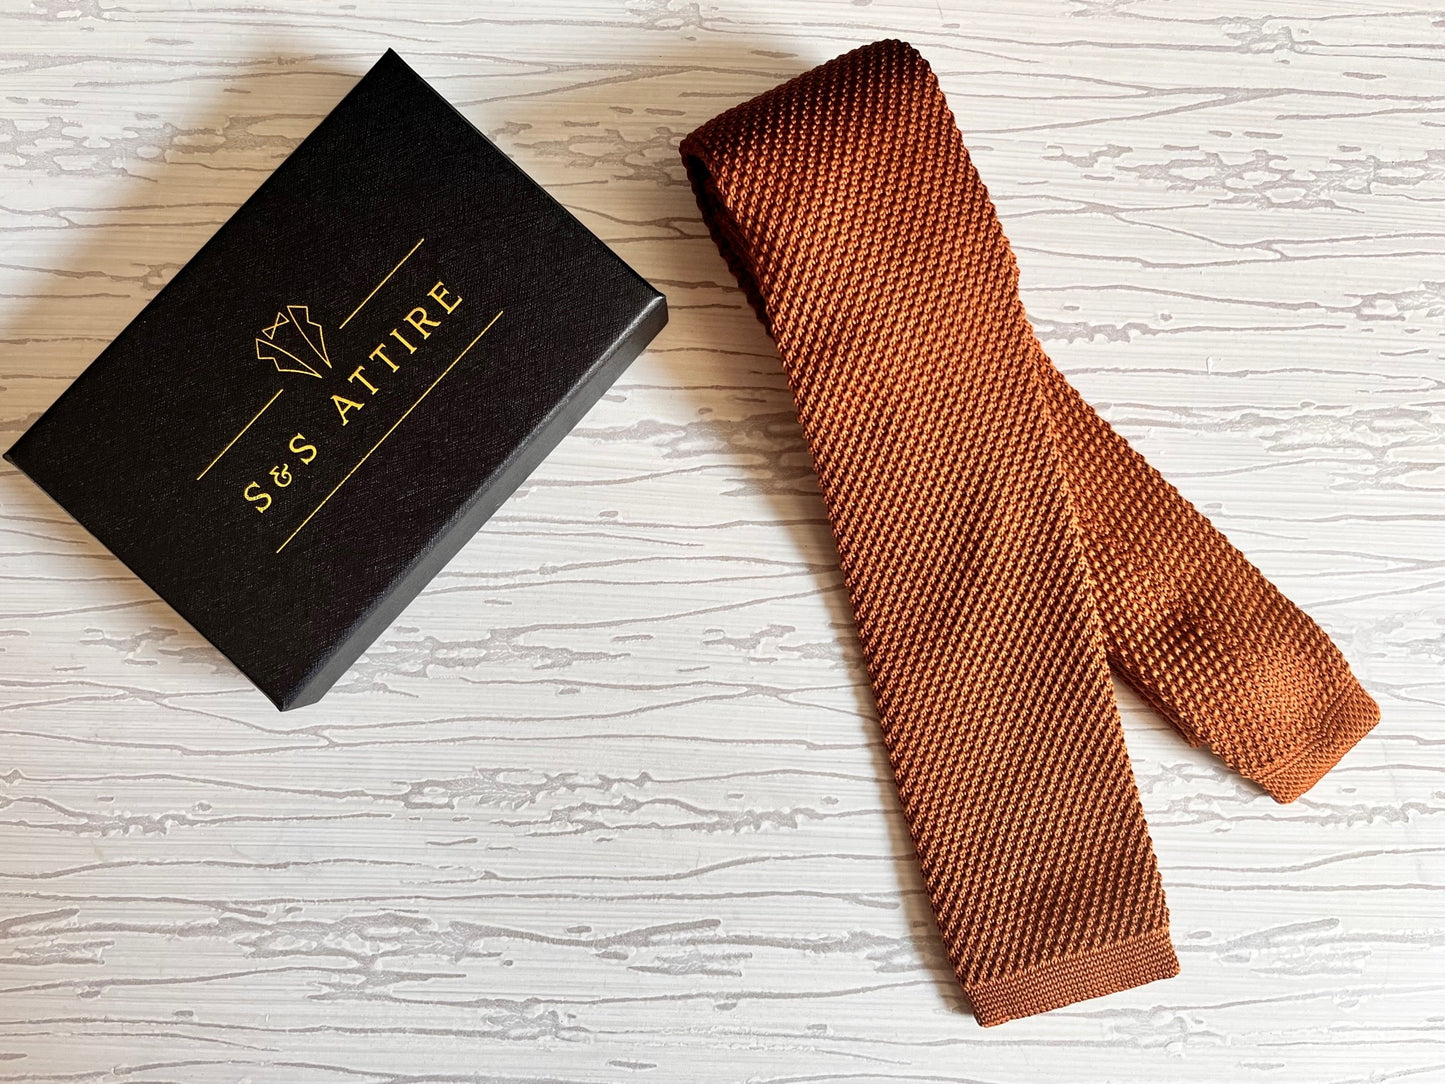 S&S Attire Knitted Tie Rust